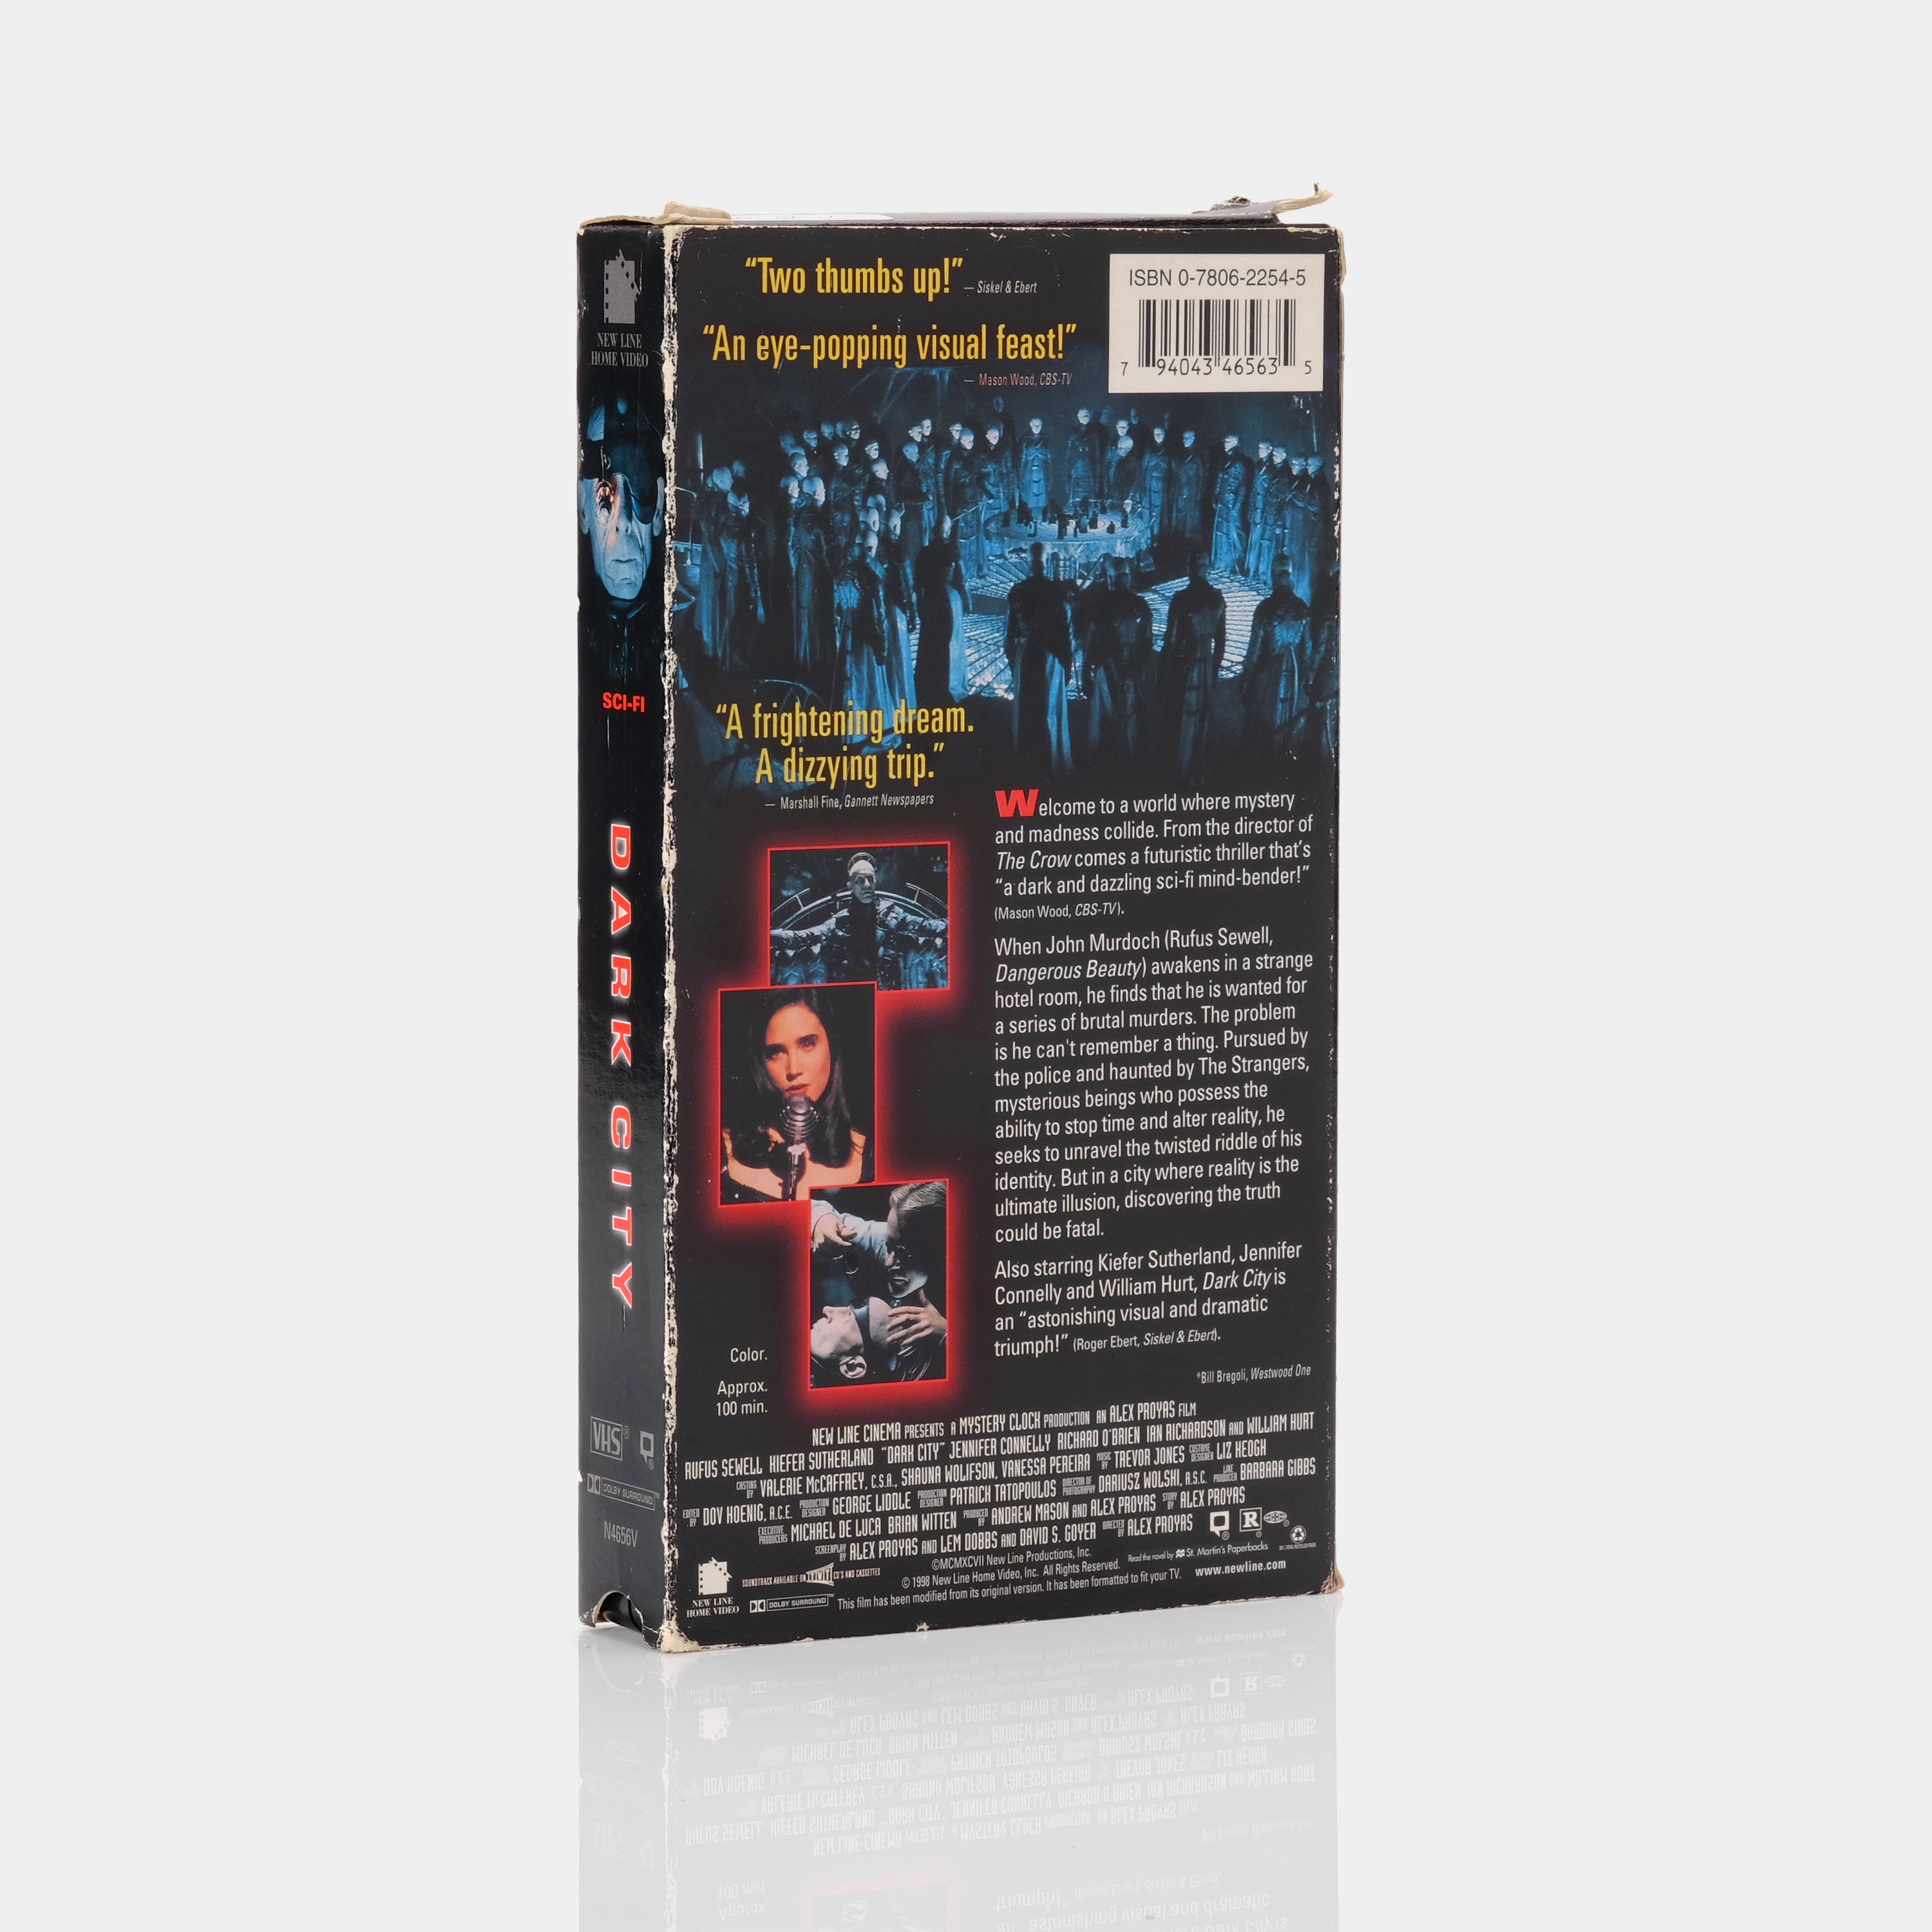 Dark City VHS Tape